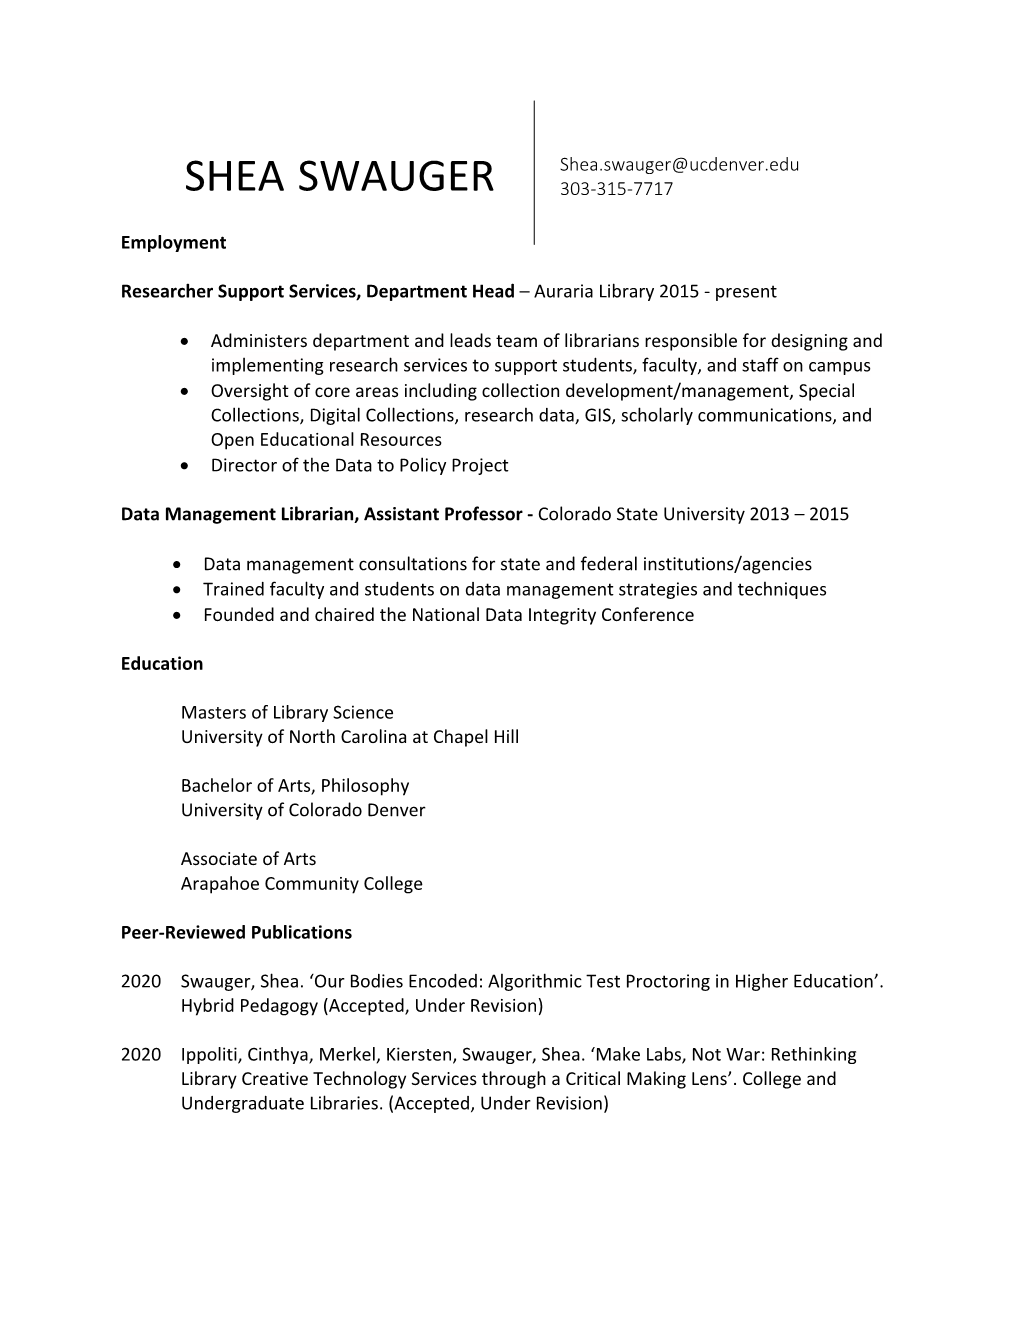 Shea Swauger 303-315-7717